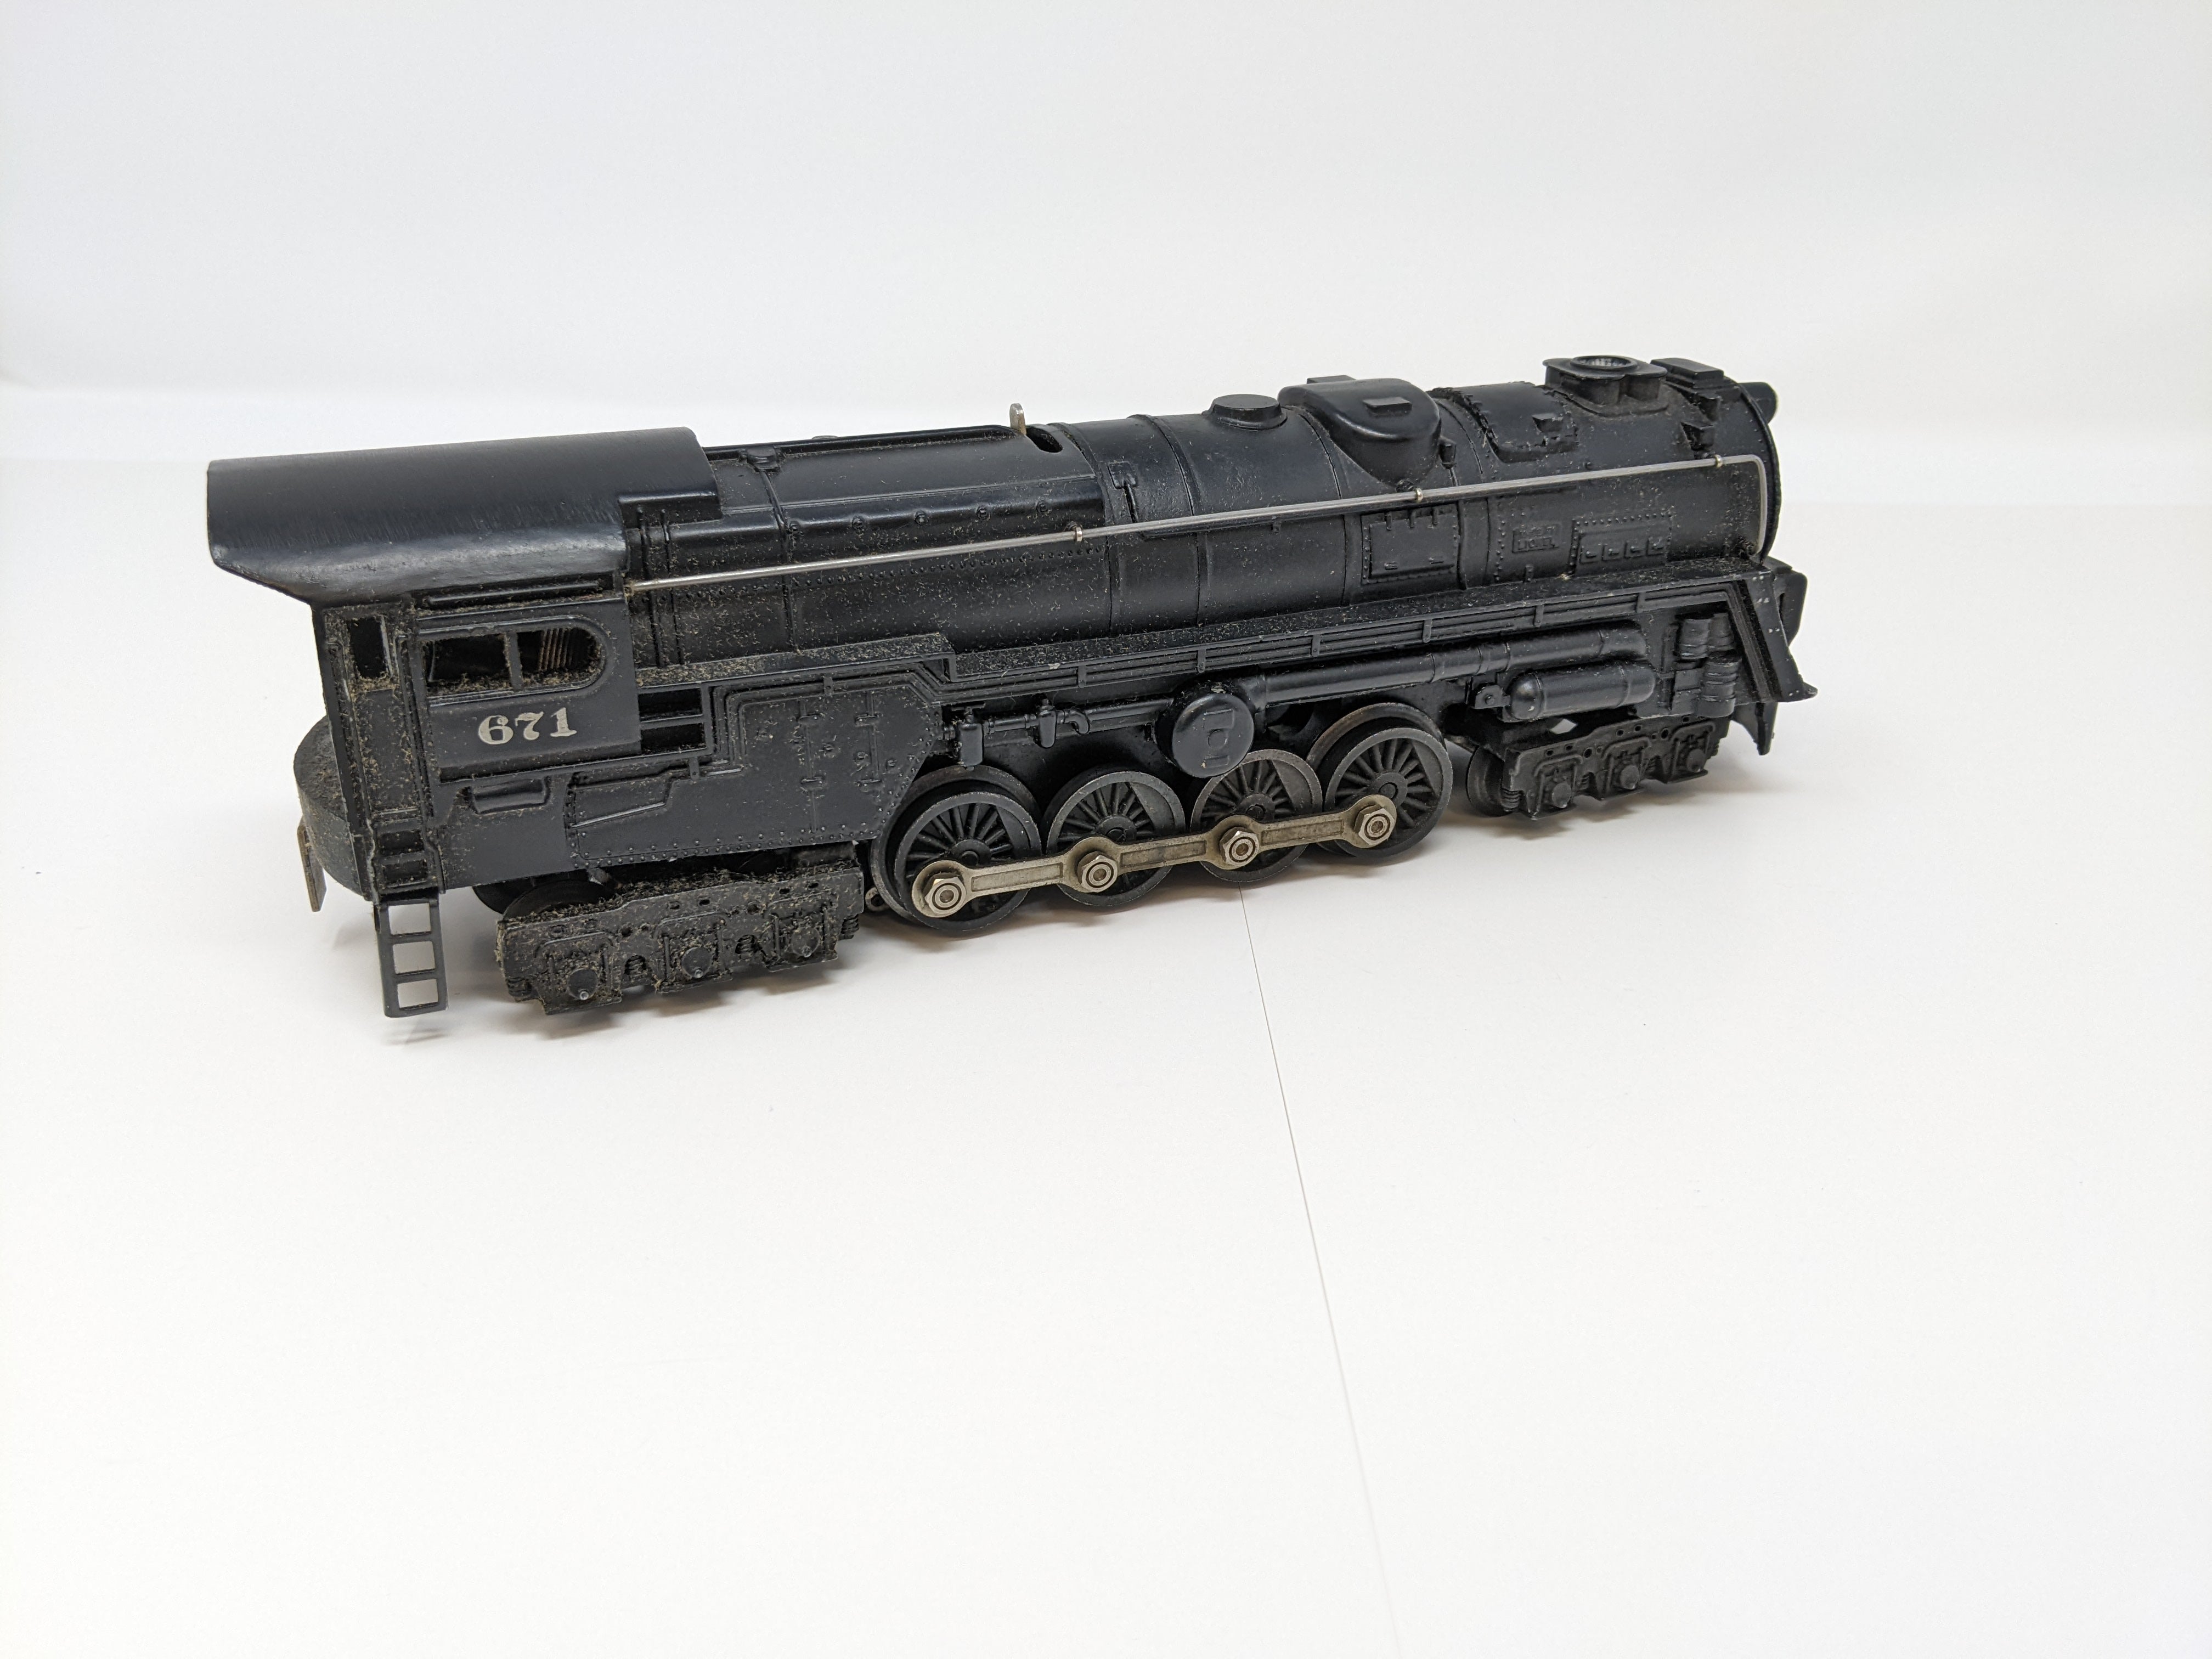 USED Lionel 671 O, Turbine Locomotive with Smoke Chamber, Pennsylvania #6200, Box